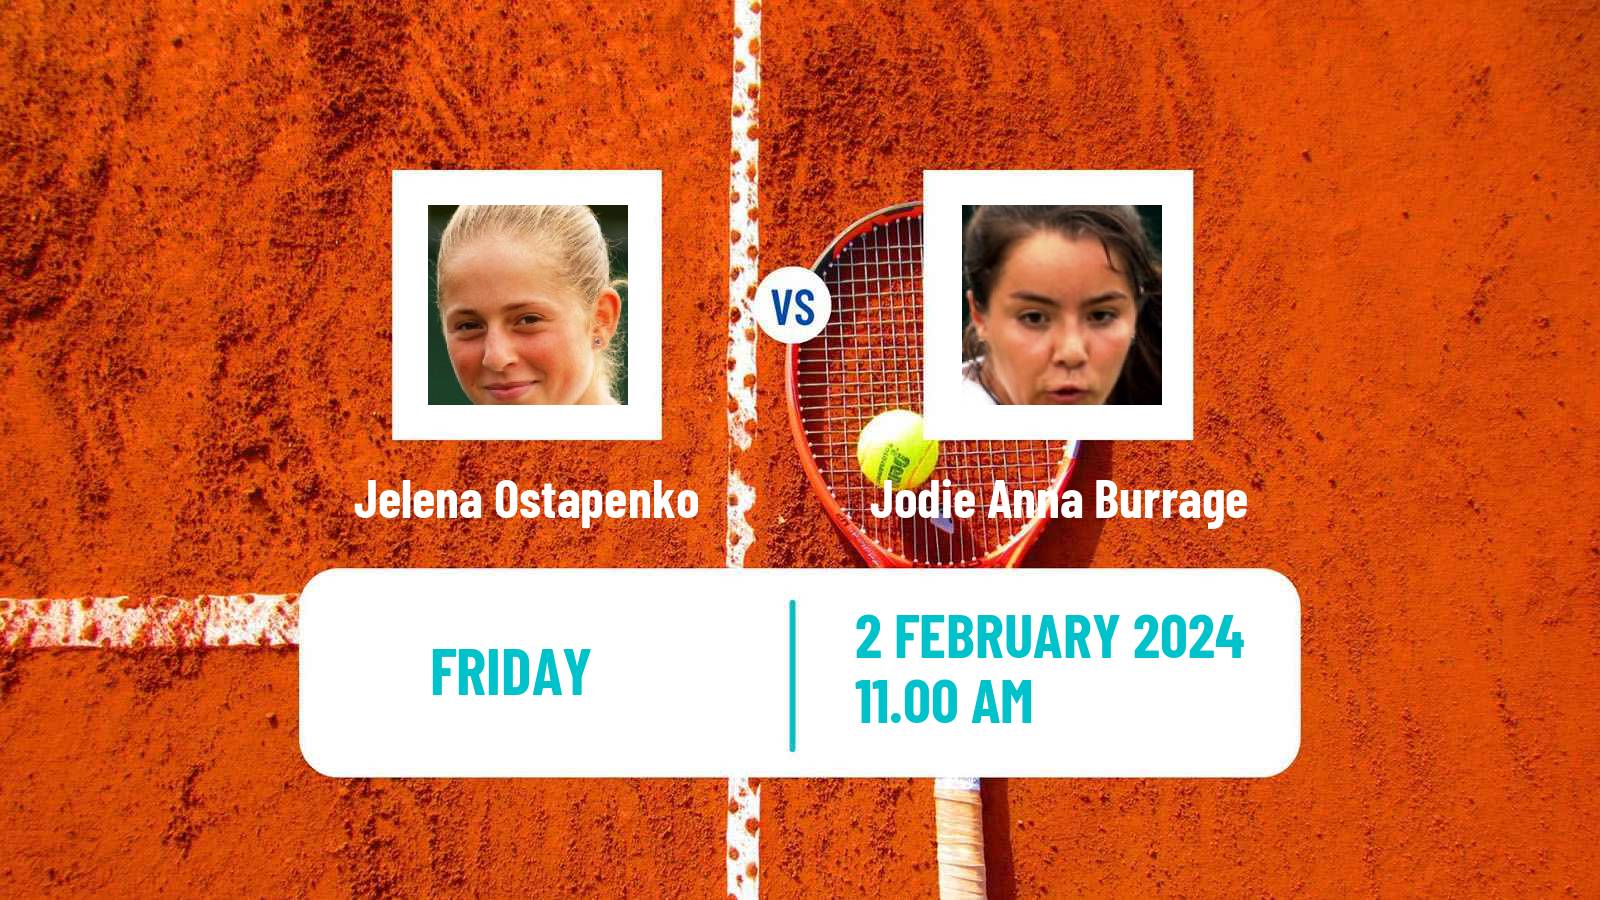 Tennis WTA Linz Jelena Ostapenko - Jodie Anna Burrage